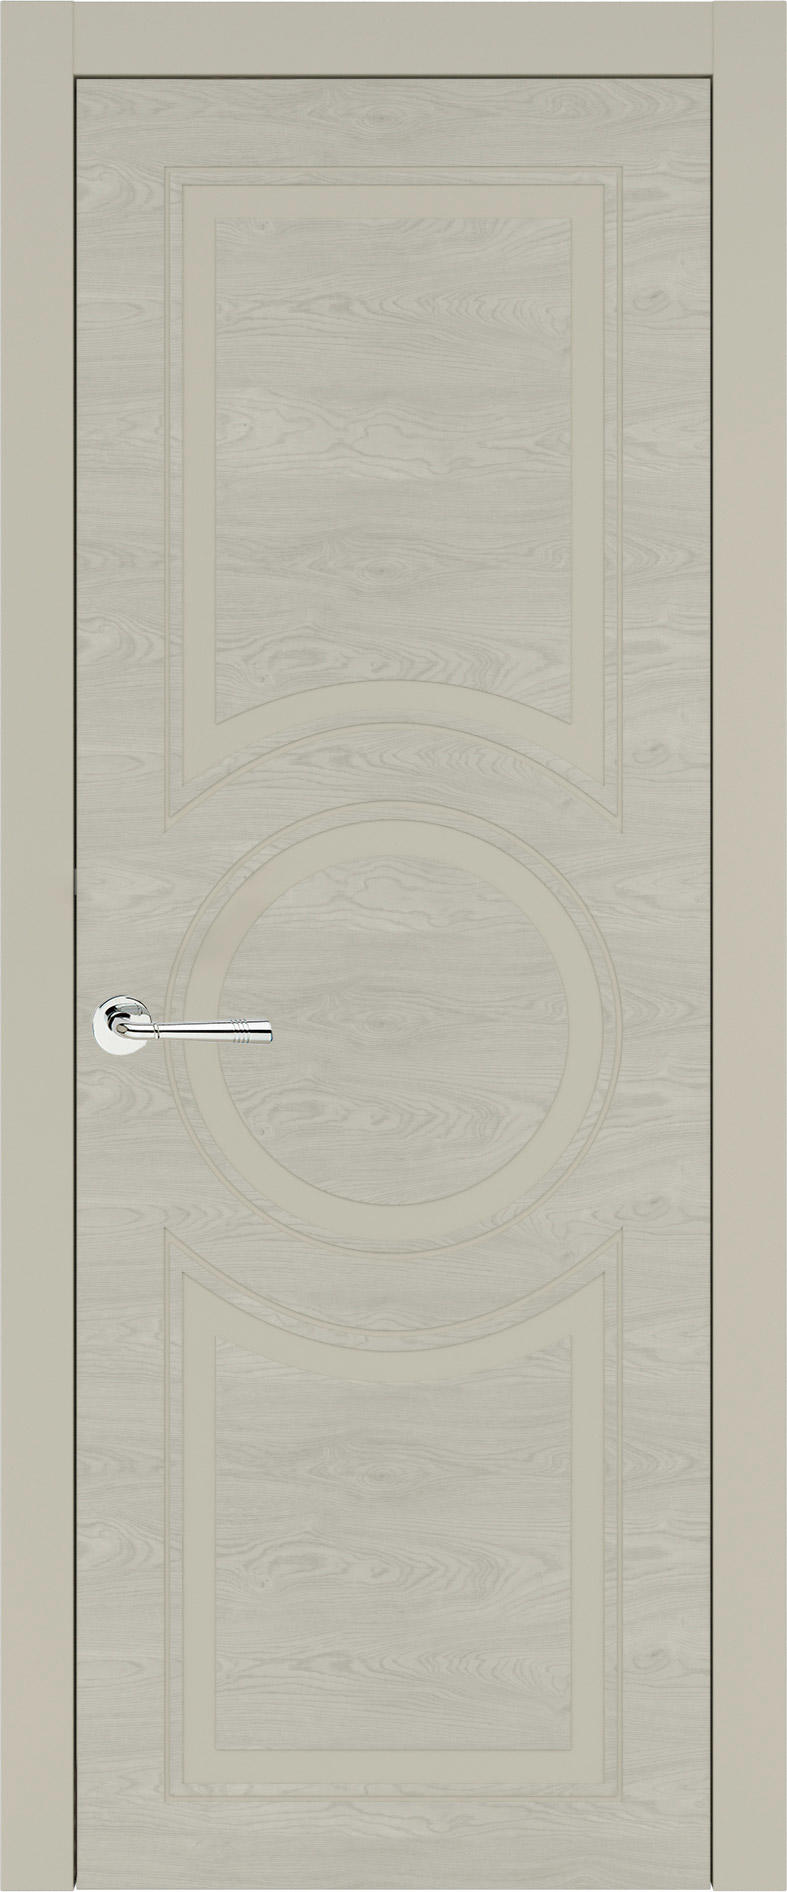 Ravenna Neo Classic цвет - Серо-оливковая эмаль по шпону (RAL 7032) Без стекла (ДГ)